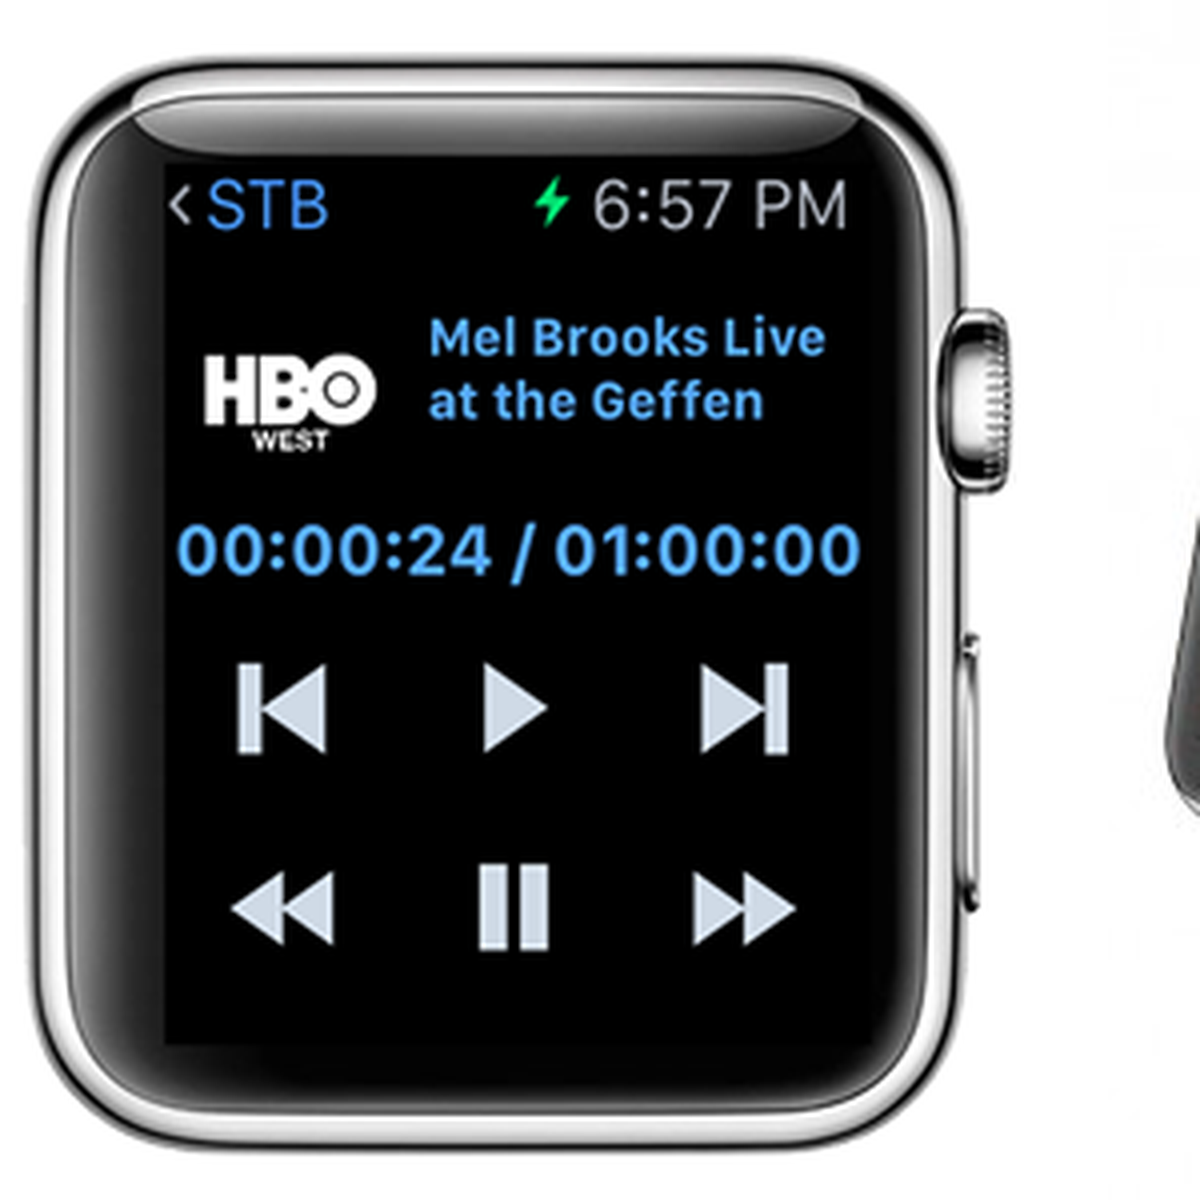 Bare overfyldt Sæt tabellen op nuttet Apple Watch Brings Your TV's Remote Control to Your Wrist - MacRumors